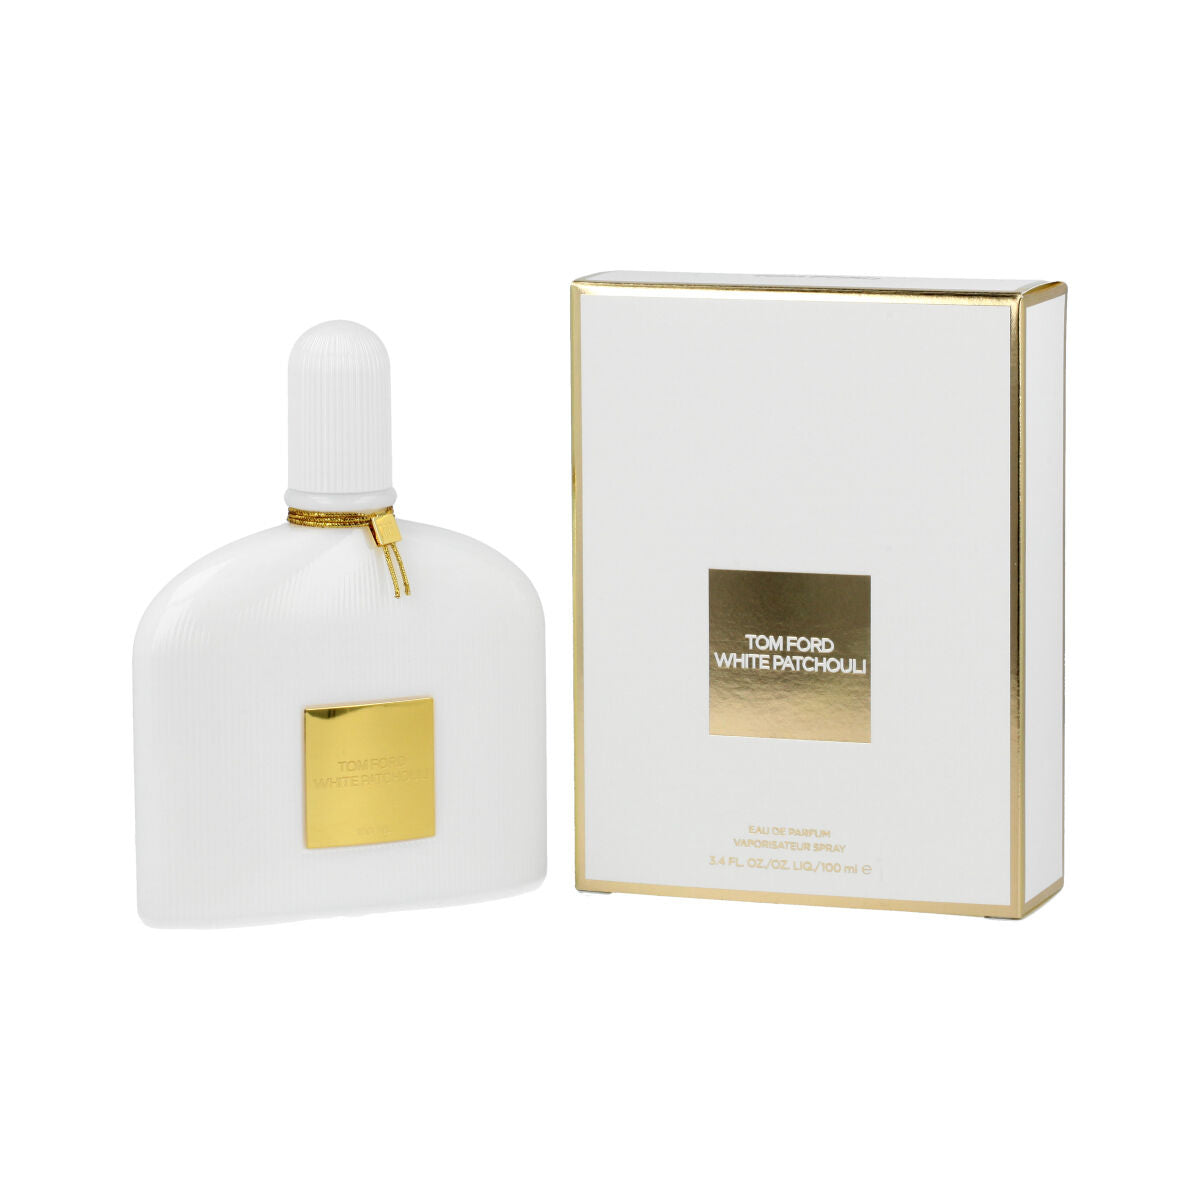 Tom Ford Women's Perfume EDP White Patchouli 100 ml